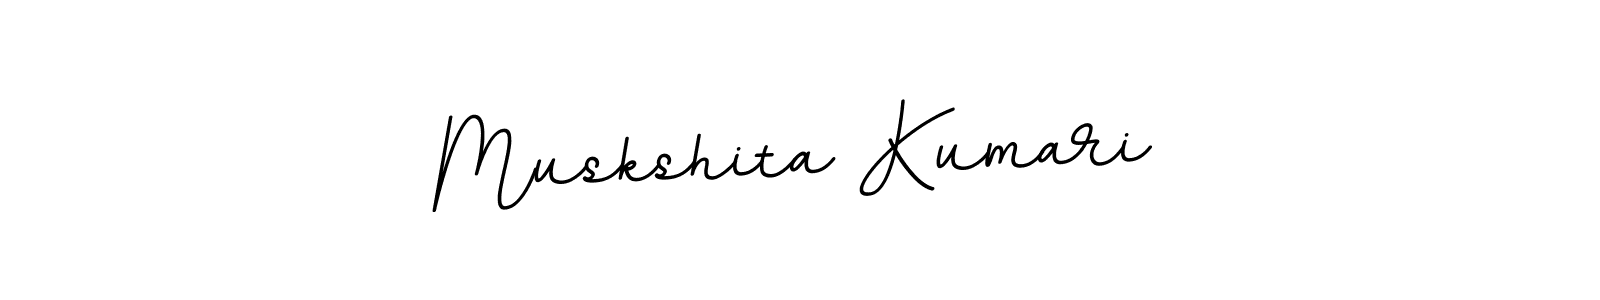 How to make Muskshita Kumari name signature. Use BallpointsItalic-DORy9 style for creating short signs online. This is the latest handwritten sign. Muskshita Kumari signature style 11 images and pictures png